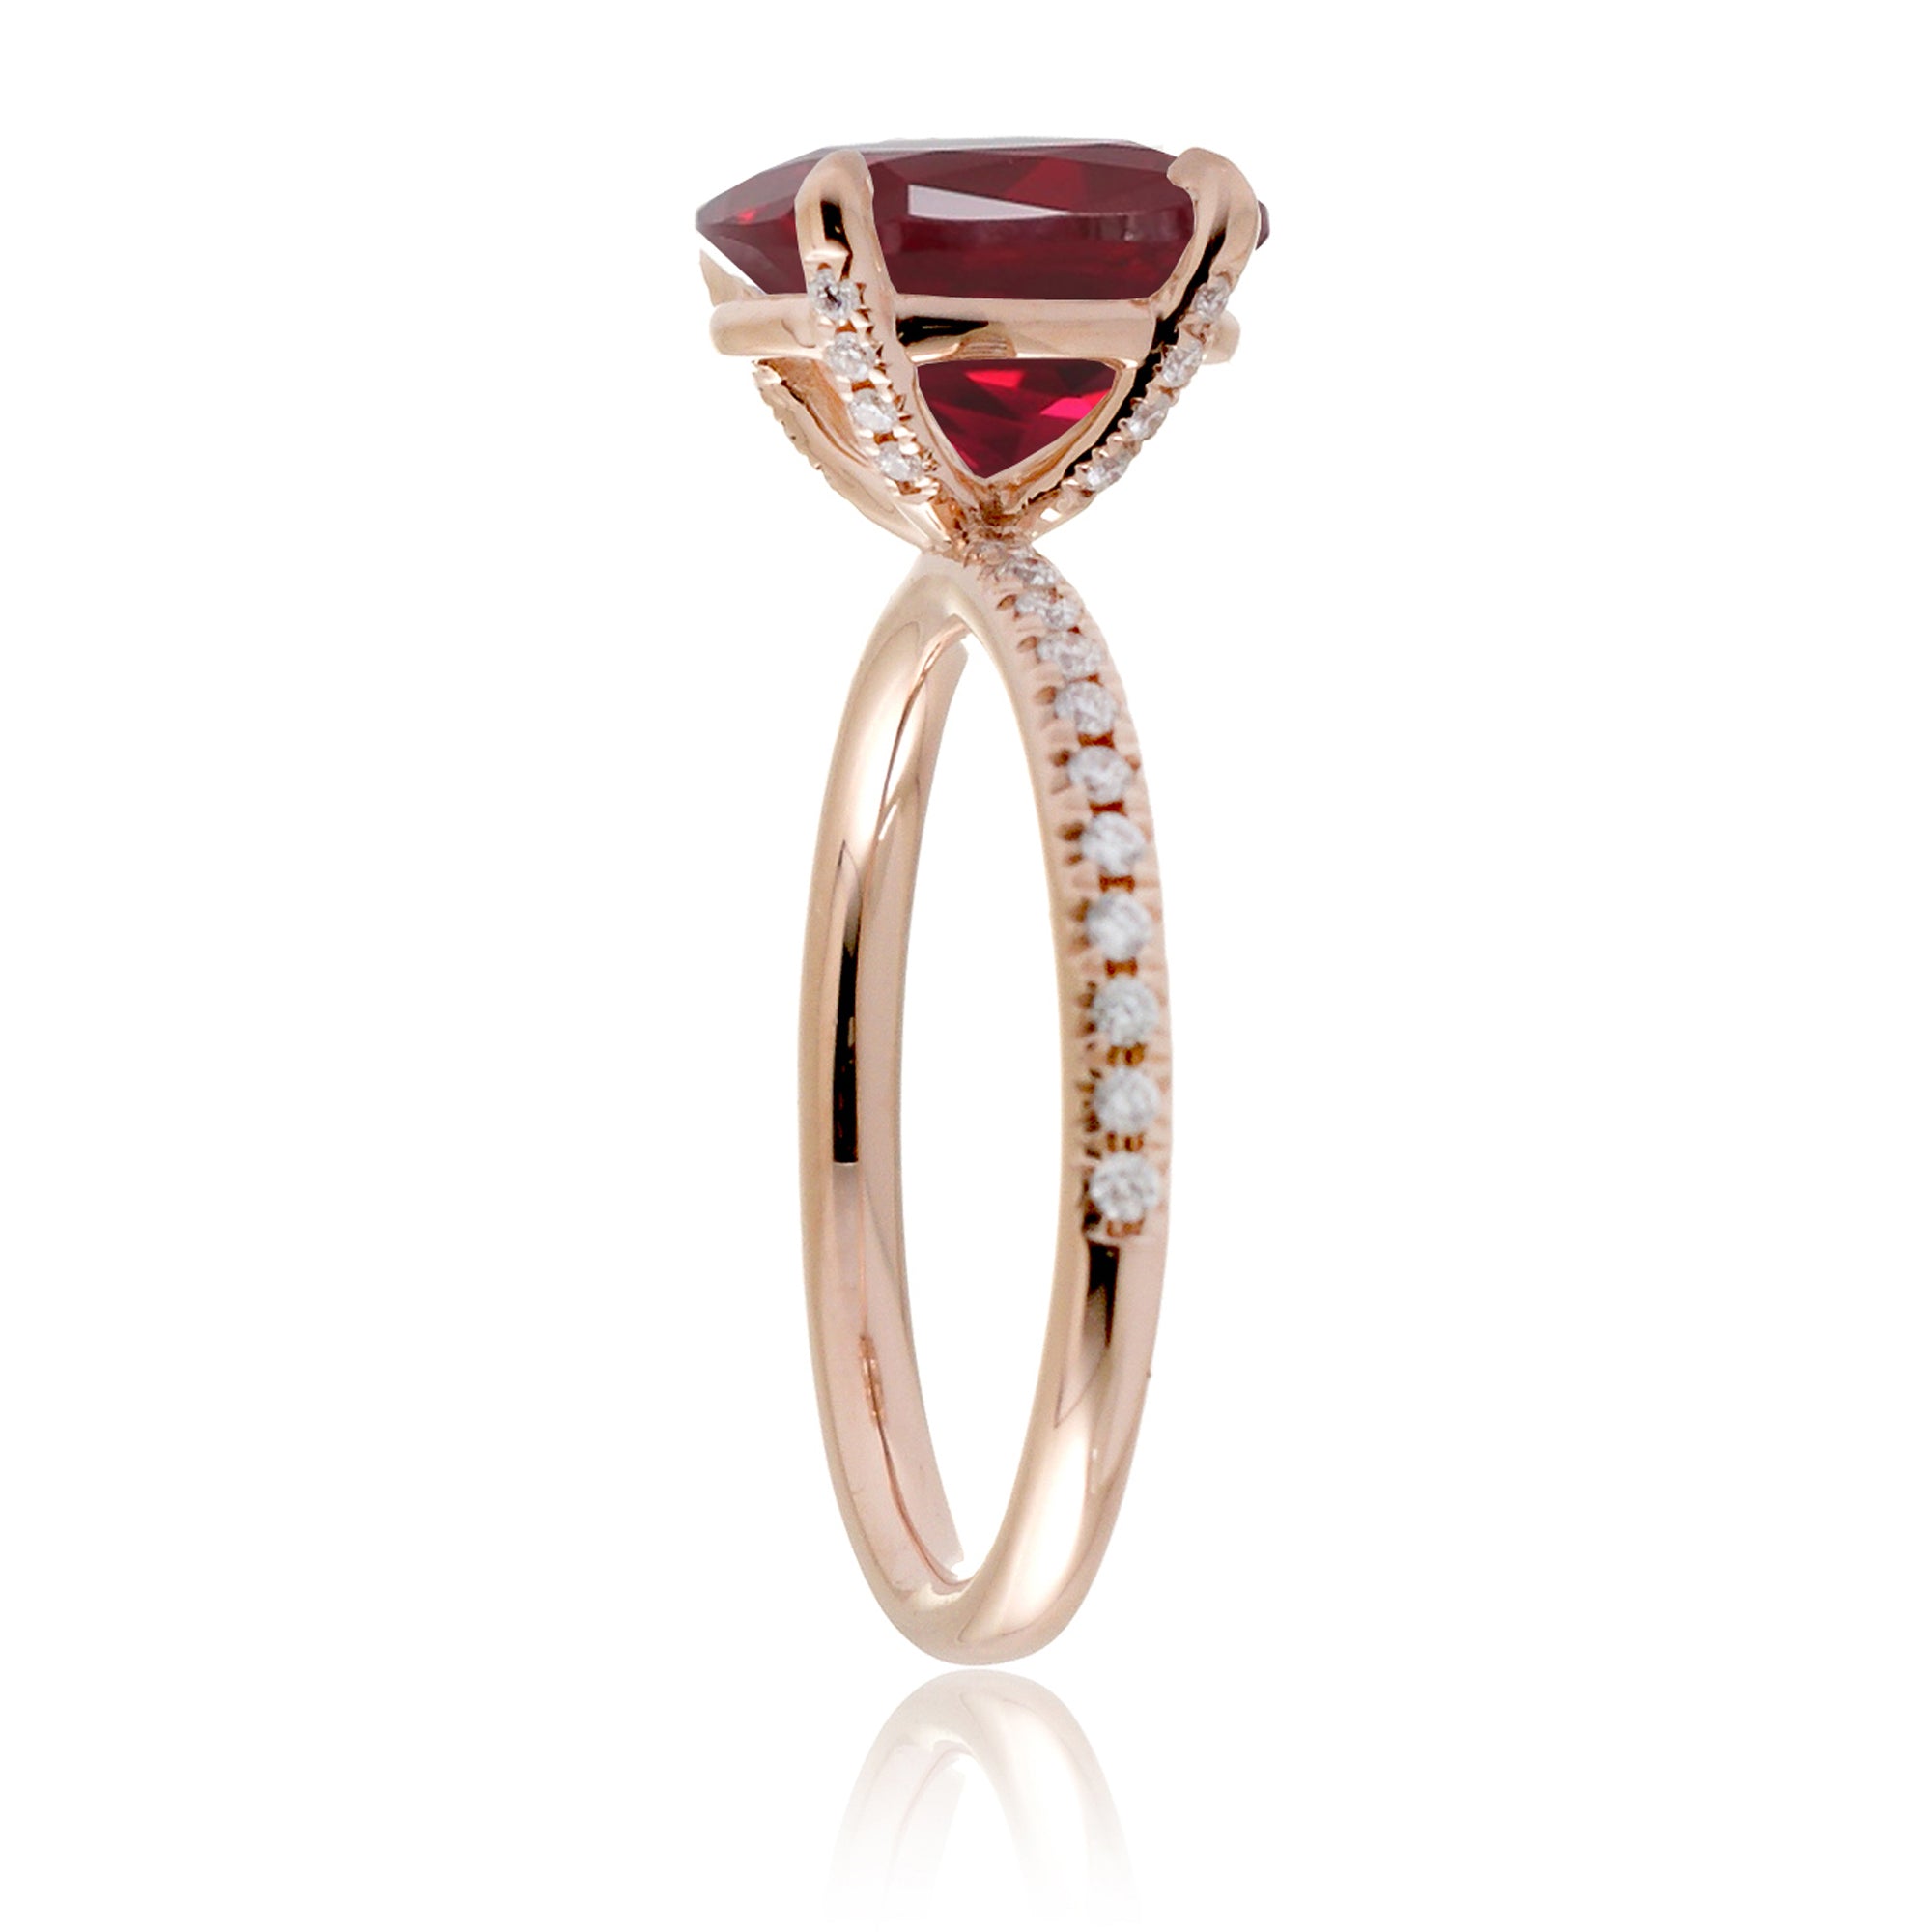 Cushion cut ruby diamond engagement ring rose gold - the Ava